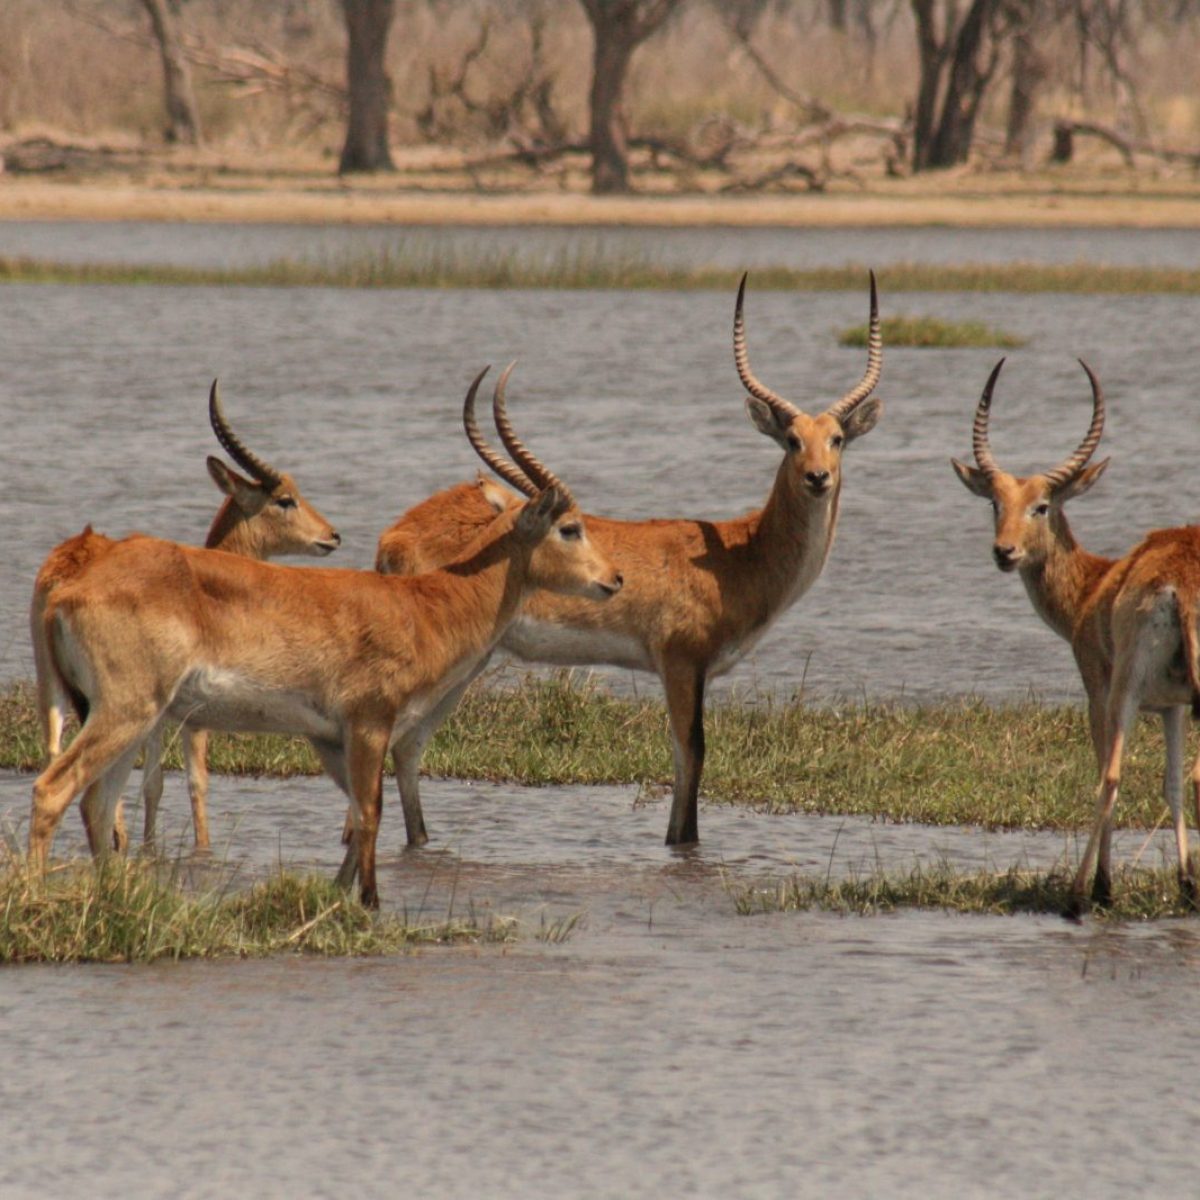 Red Lechwe. Photo credit: Ian Restall. https://commons.wikimedia.org/wiki/File:Red_Lechwe_in_the_Okavango.jpg